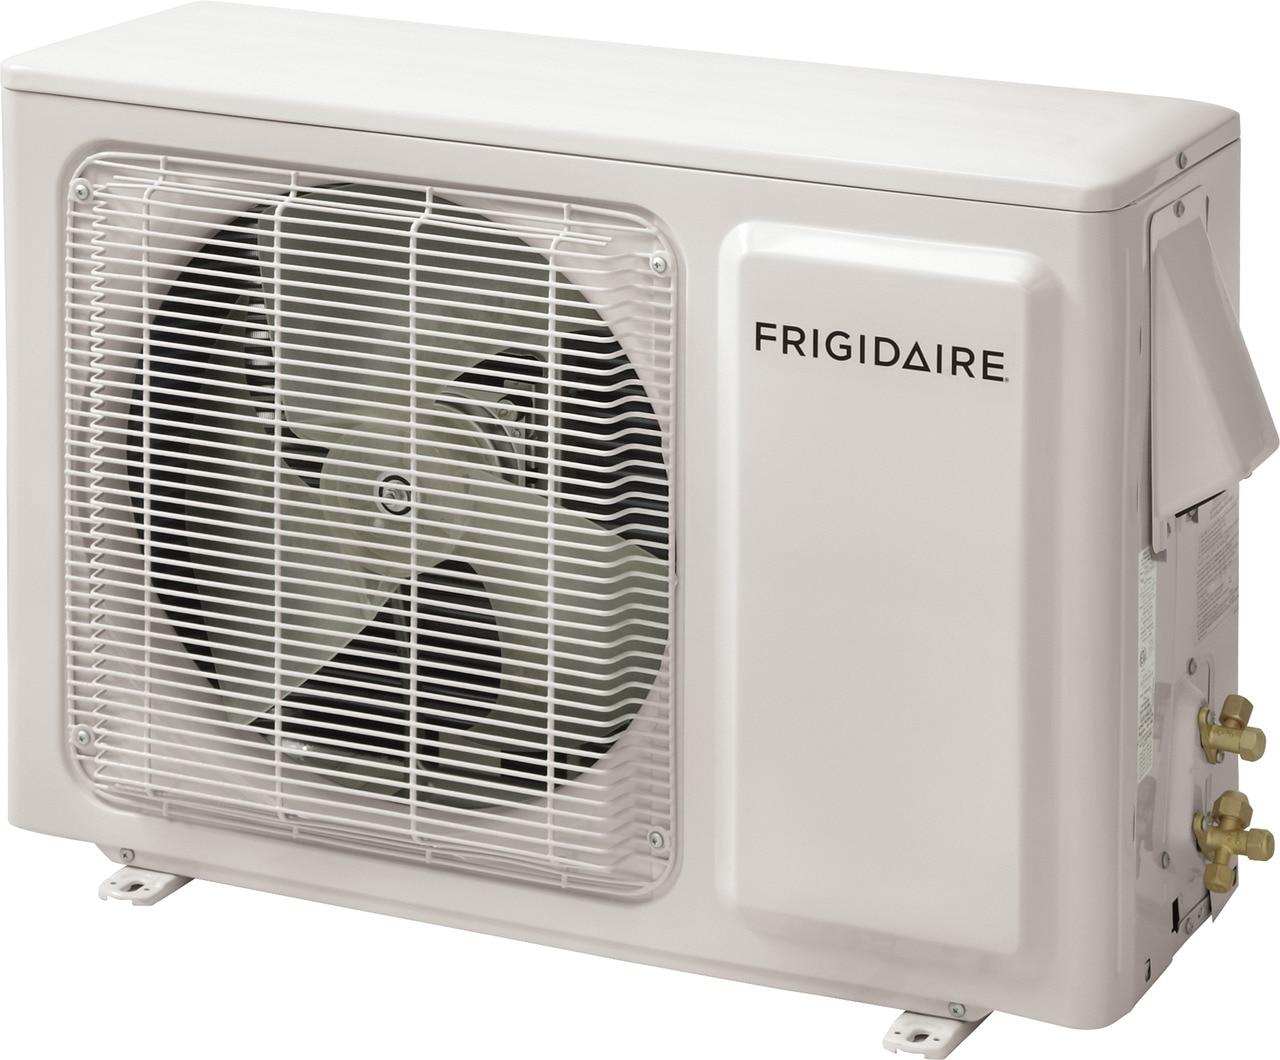 Frigidaire Ductless Split Air Conditioner with Heat Pump 18,000 BTU